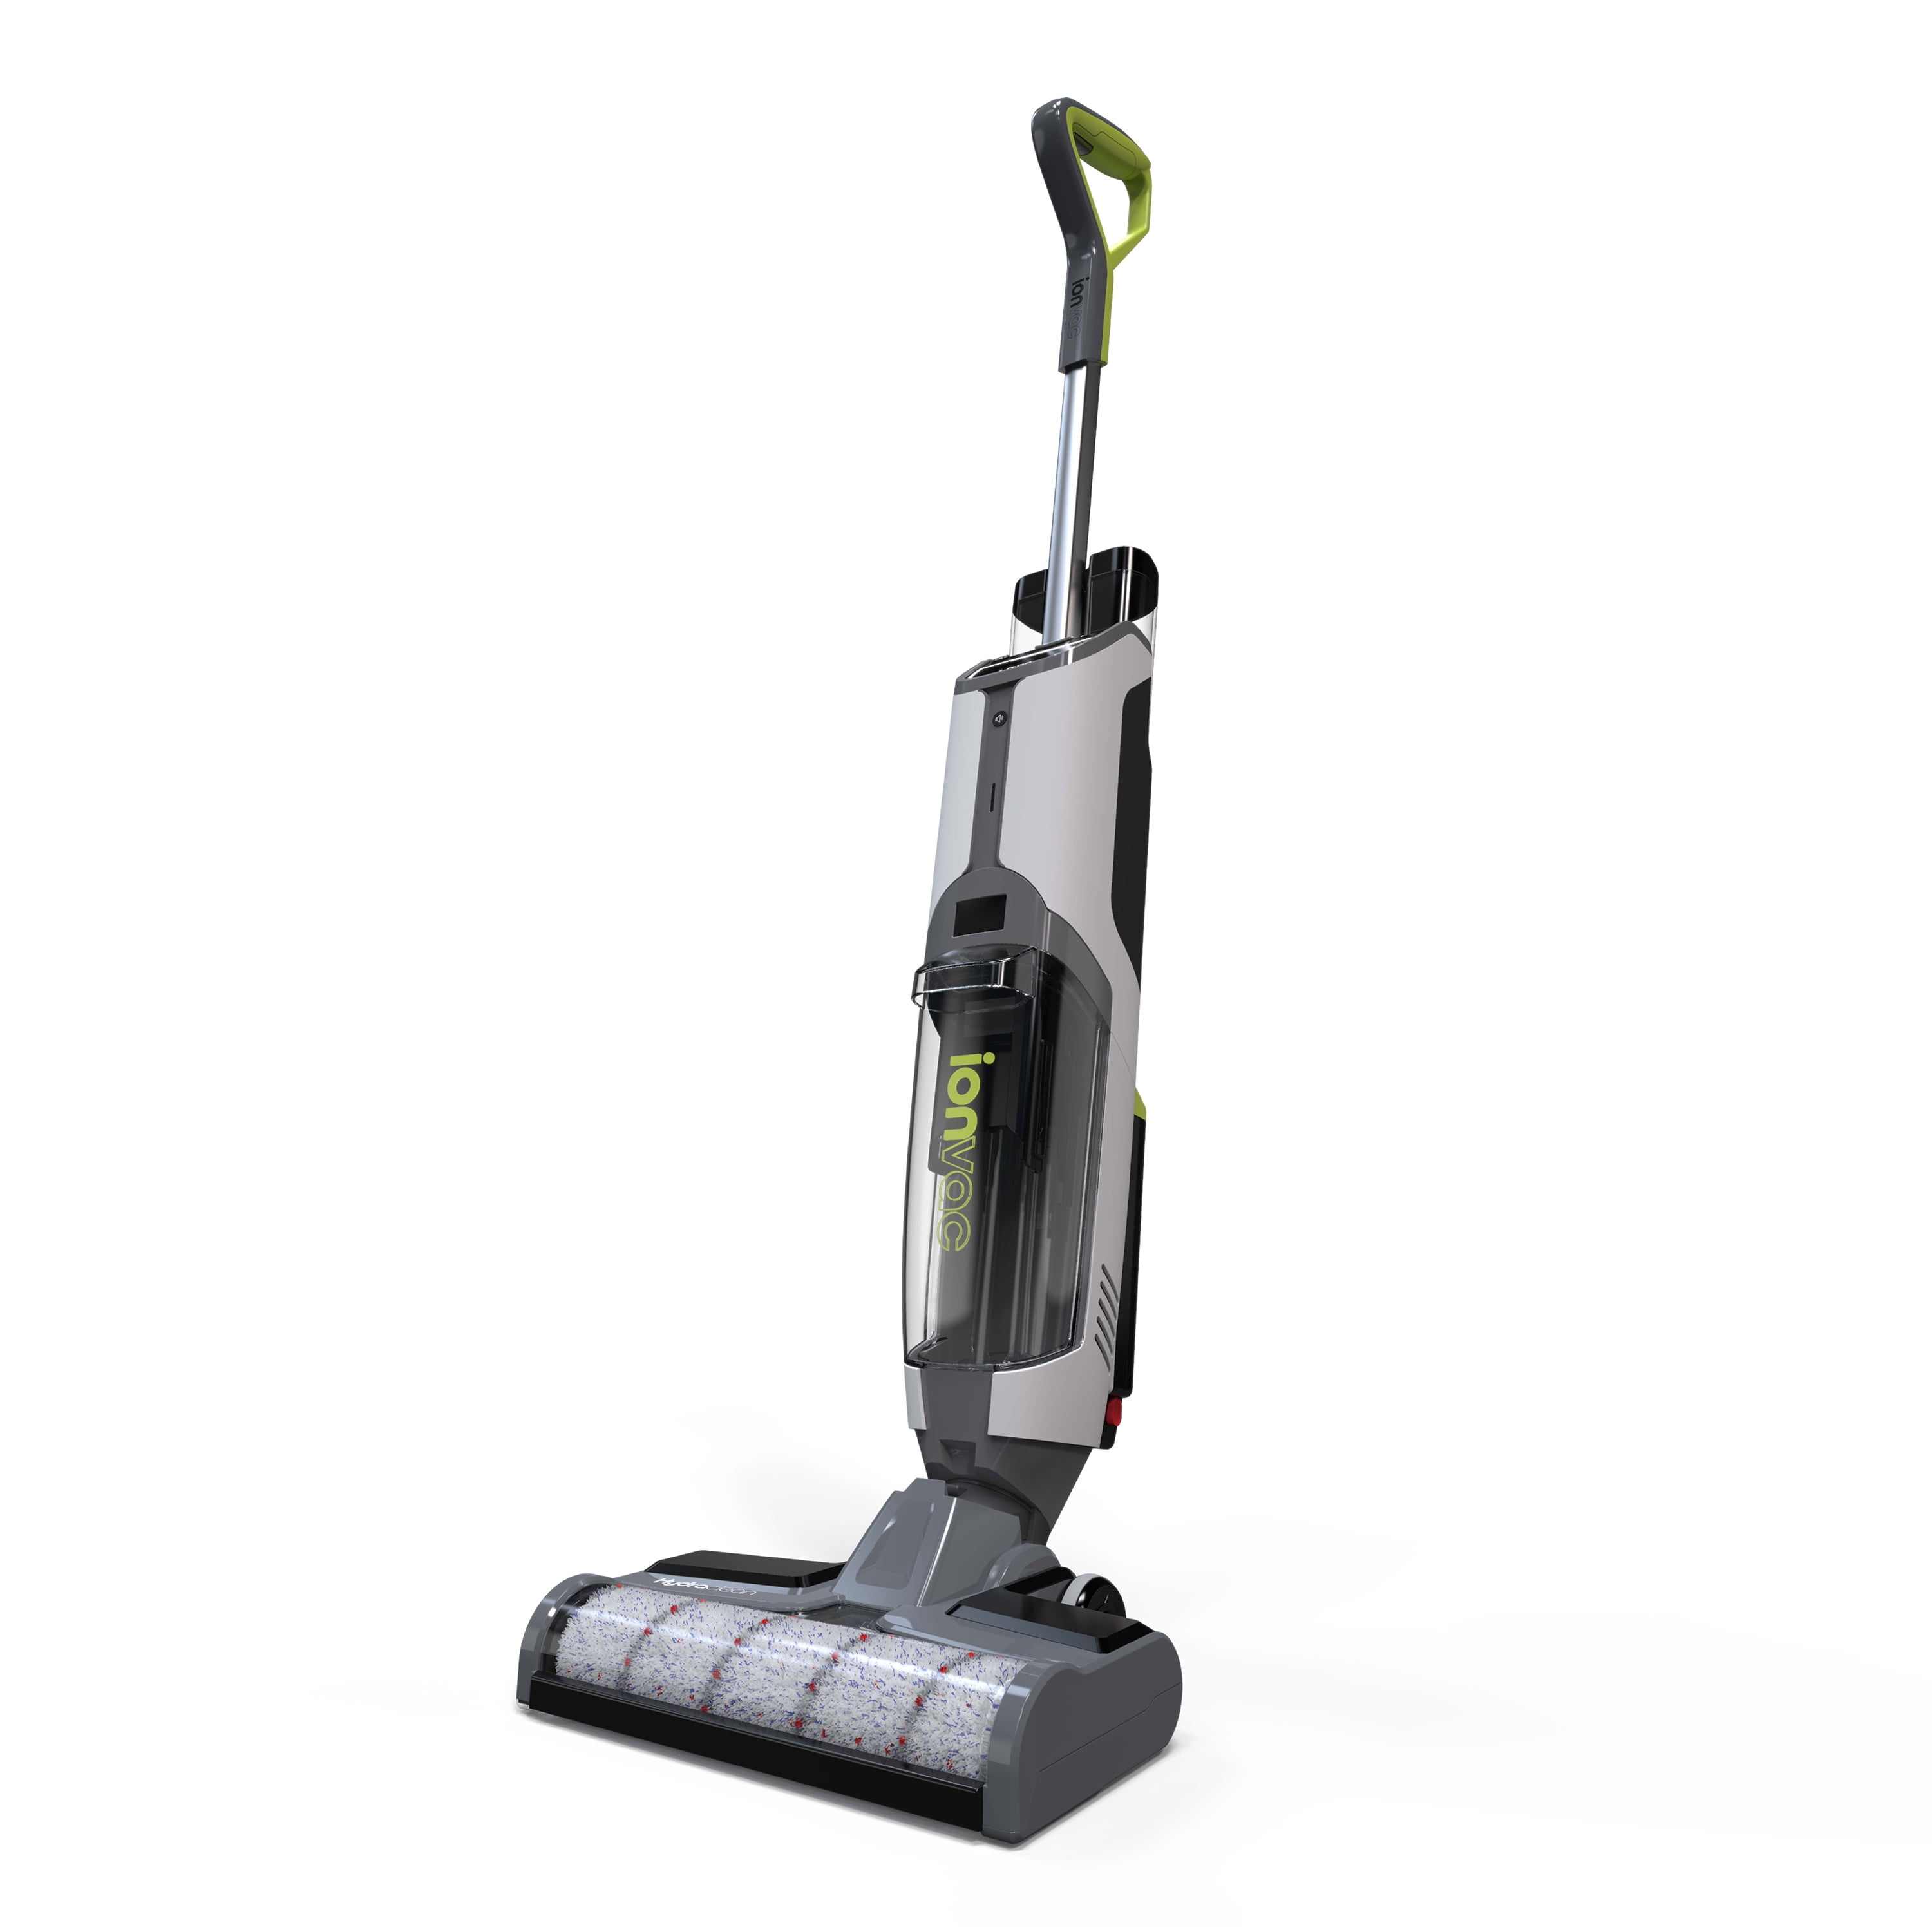 Why we like the Ionvac Lightweight Handheld Cordless Vacuum Cleaner?